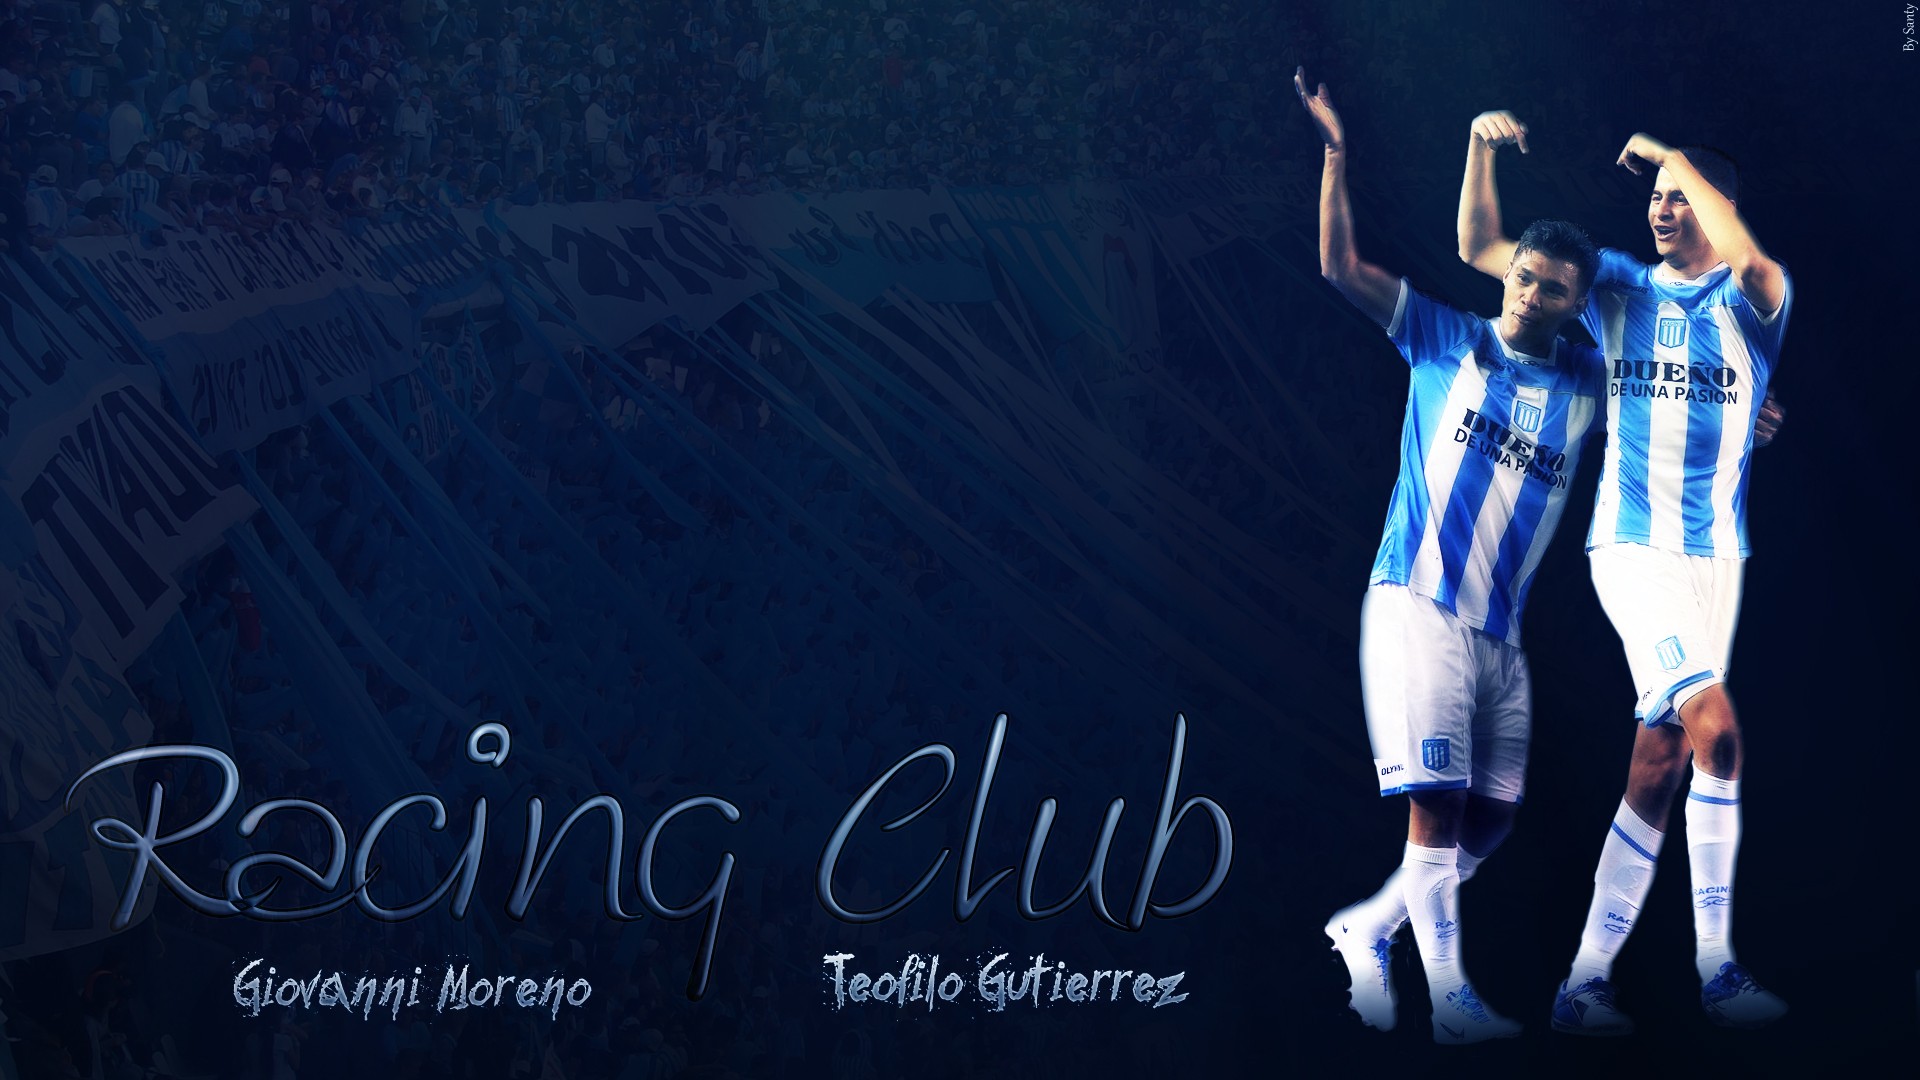 Giovanni Moreno, Racing Club, Academia, Teofilo Gutierrez, football - desktop wallpaper